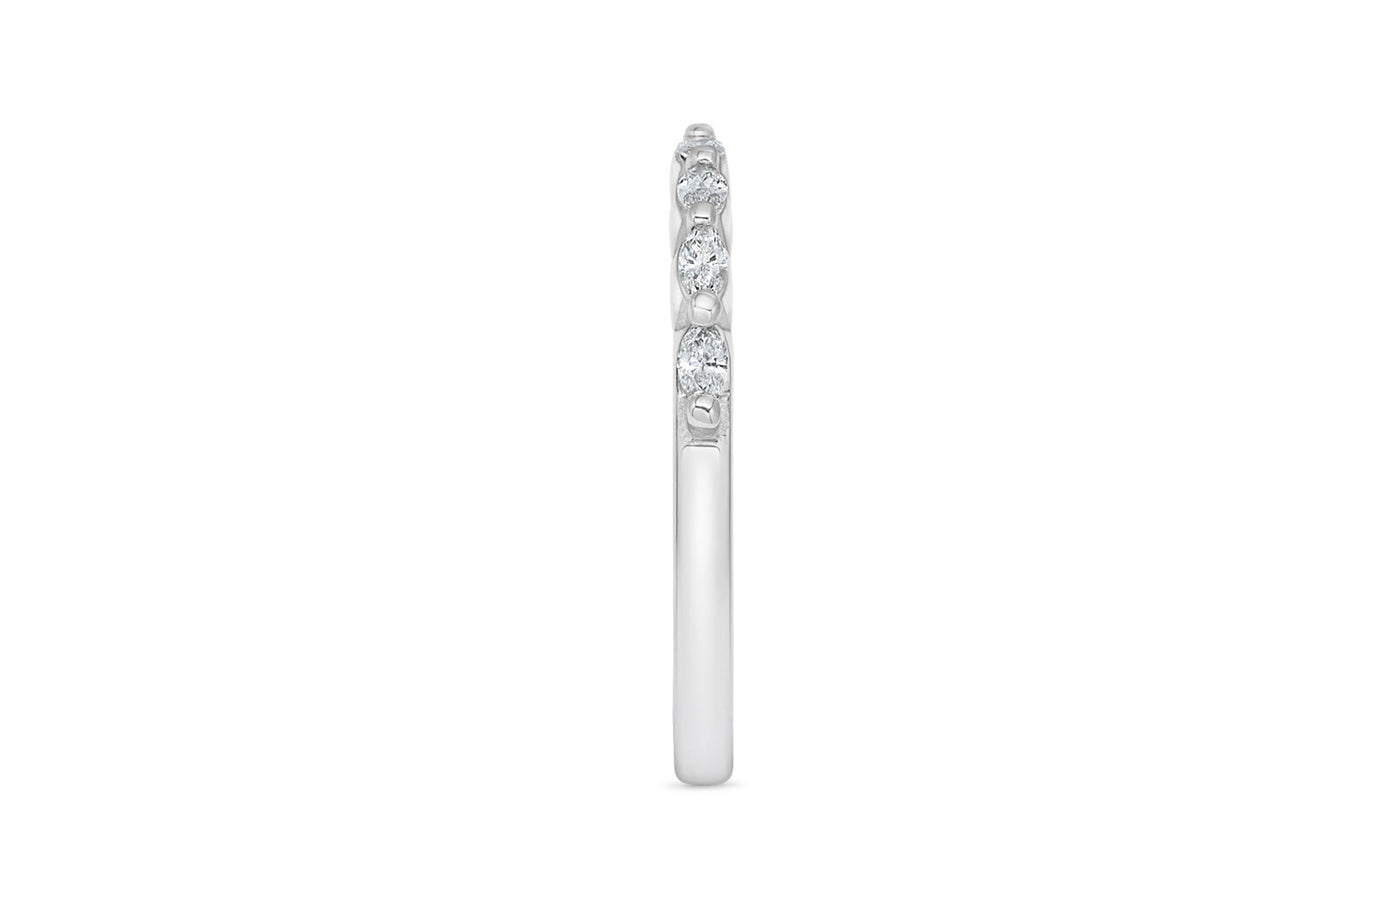 Marquise Diamond Set Ring